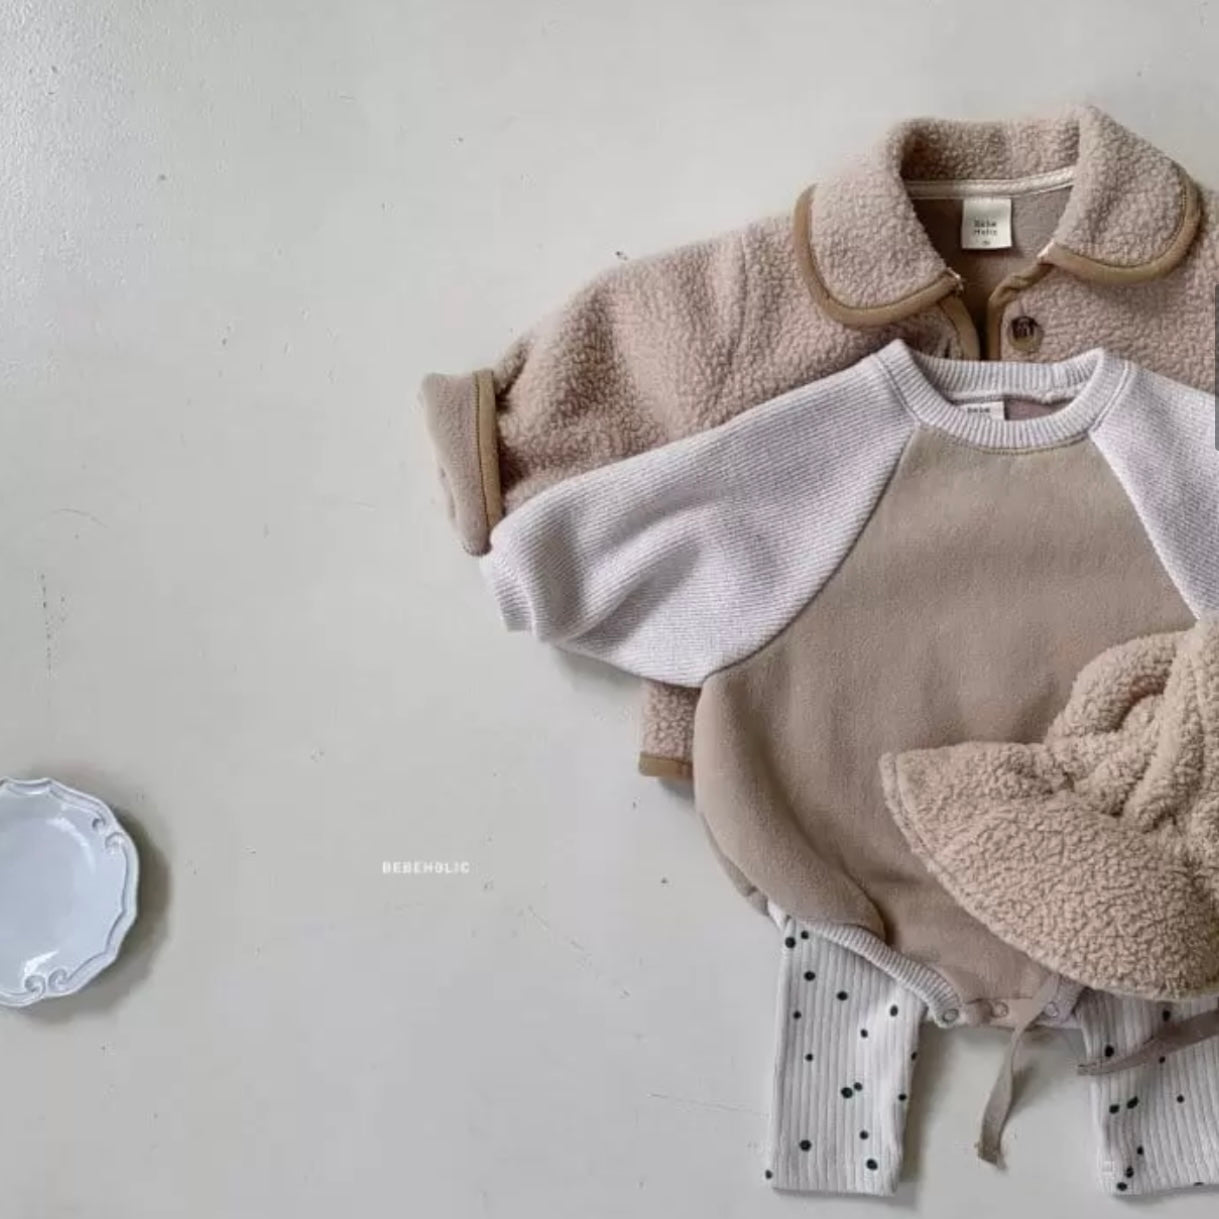 BABY Soft Sweatshirt Onesie